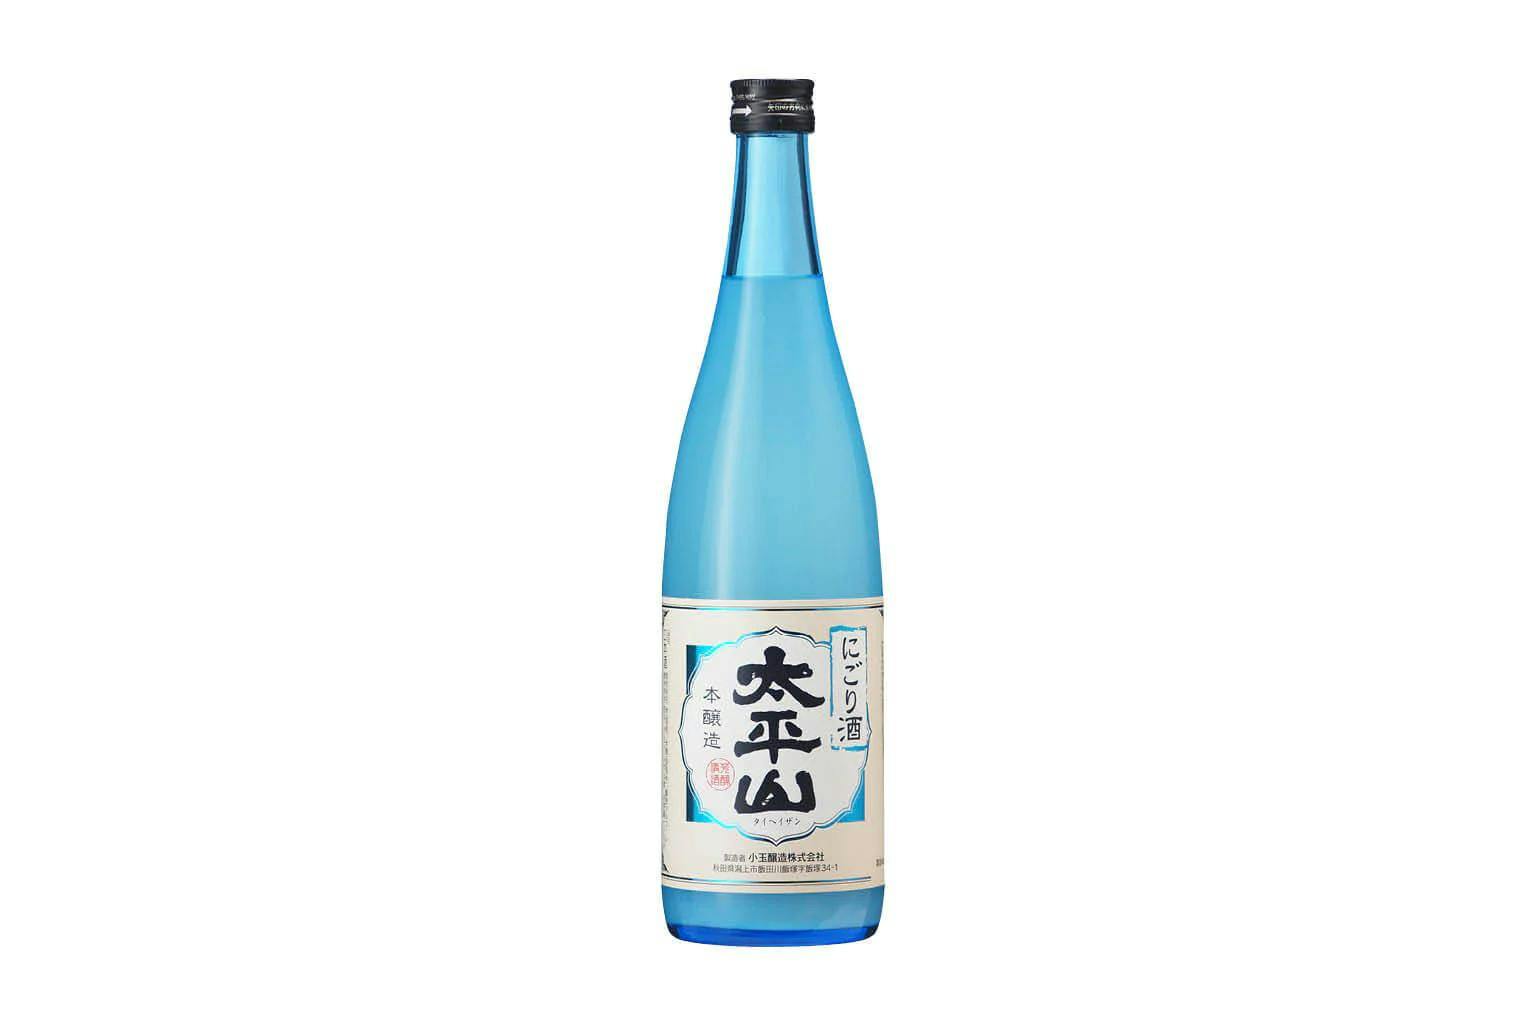 A bottle of Honjozo